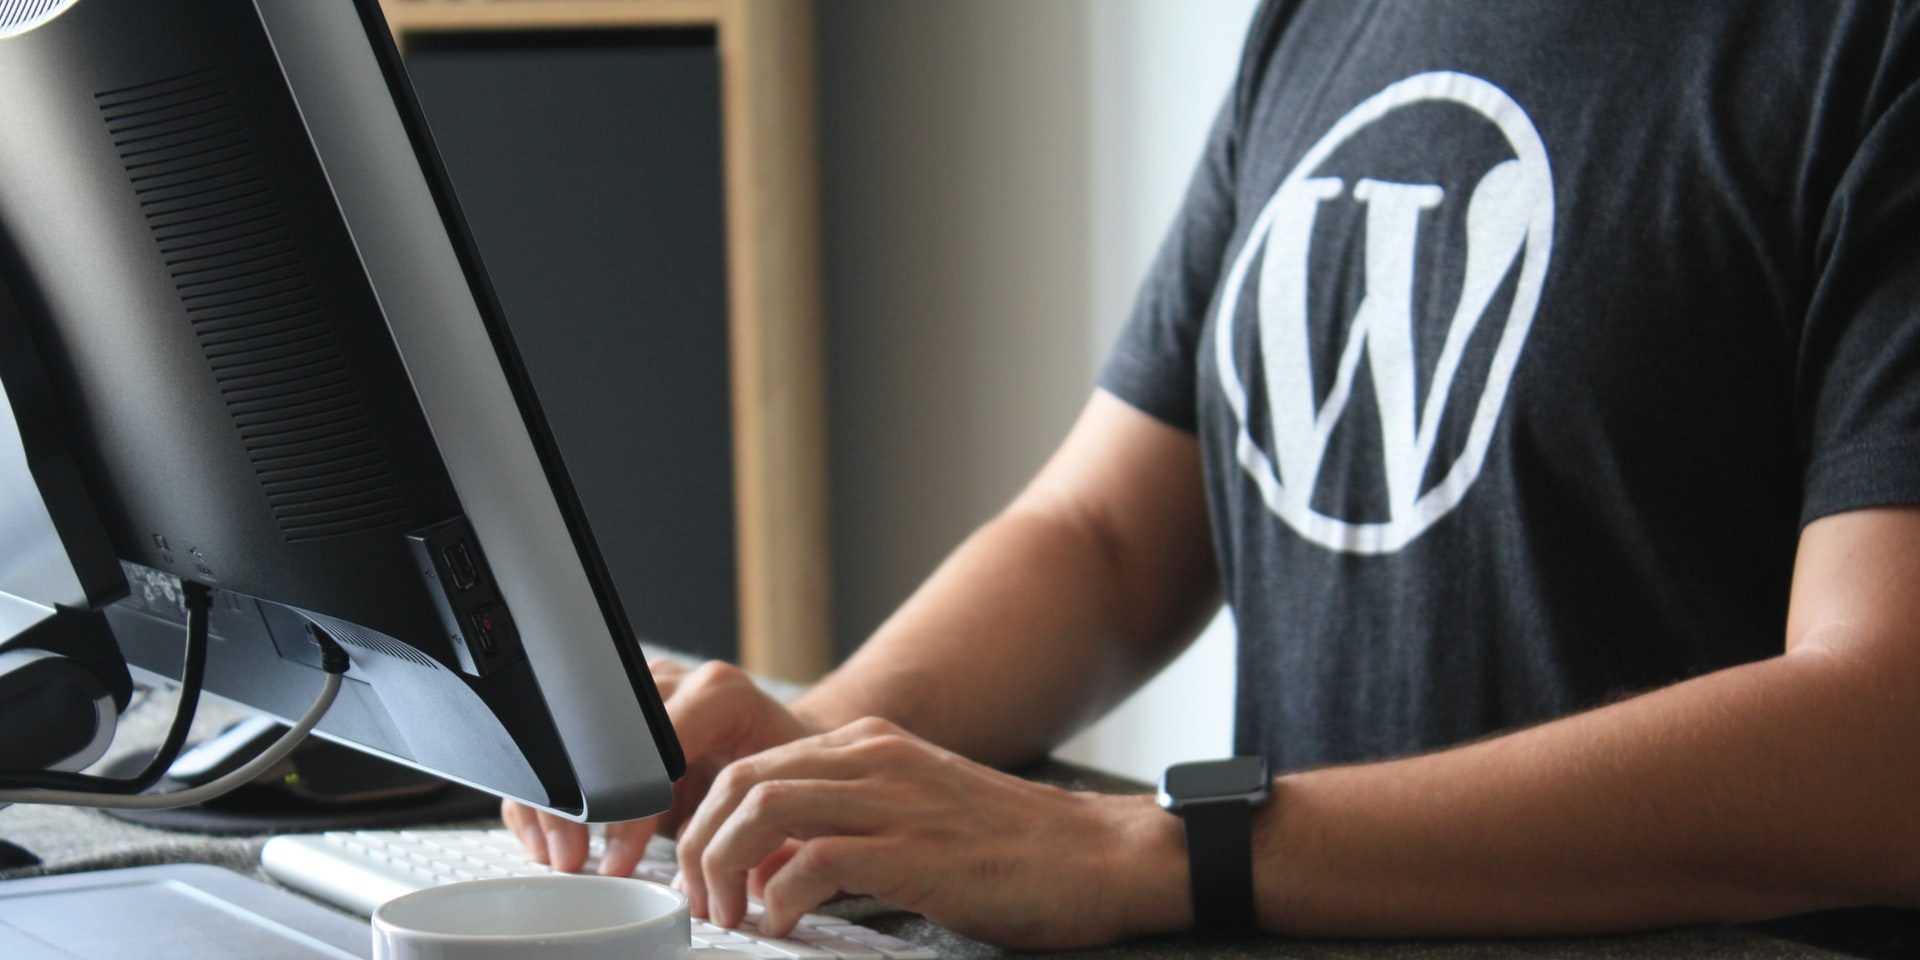 WordPress shirt and Laptop